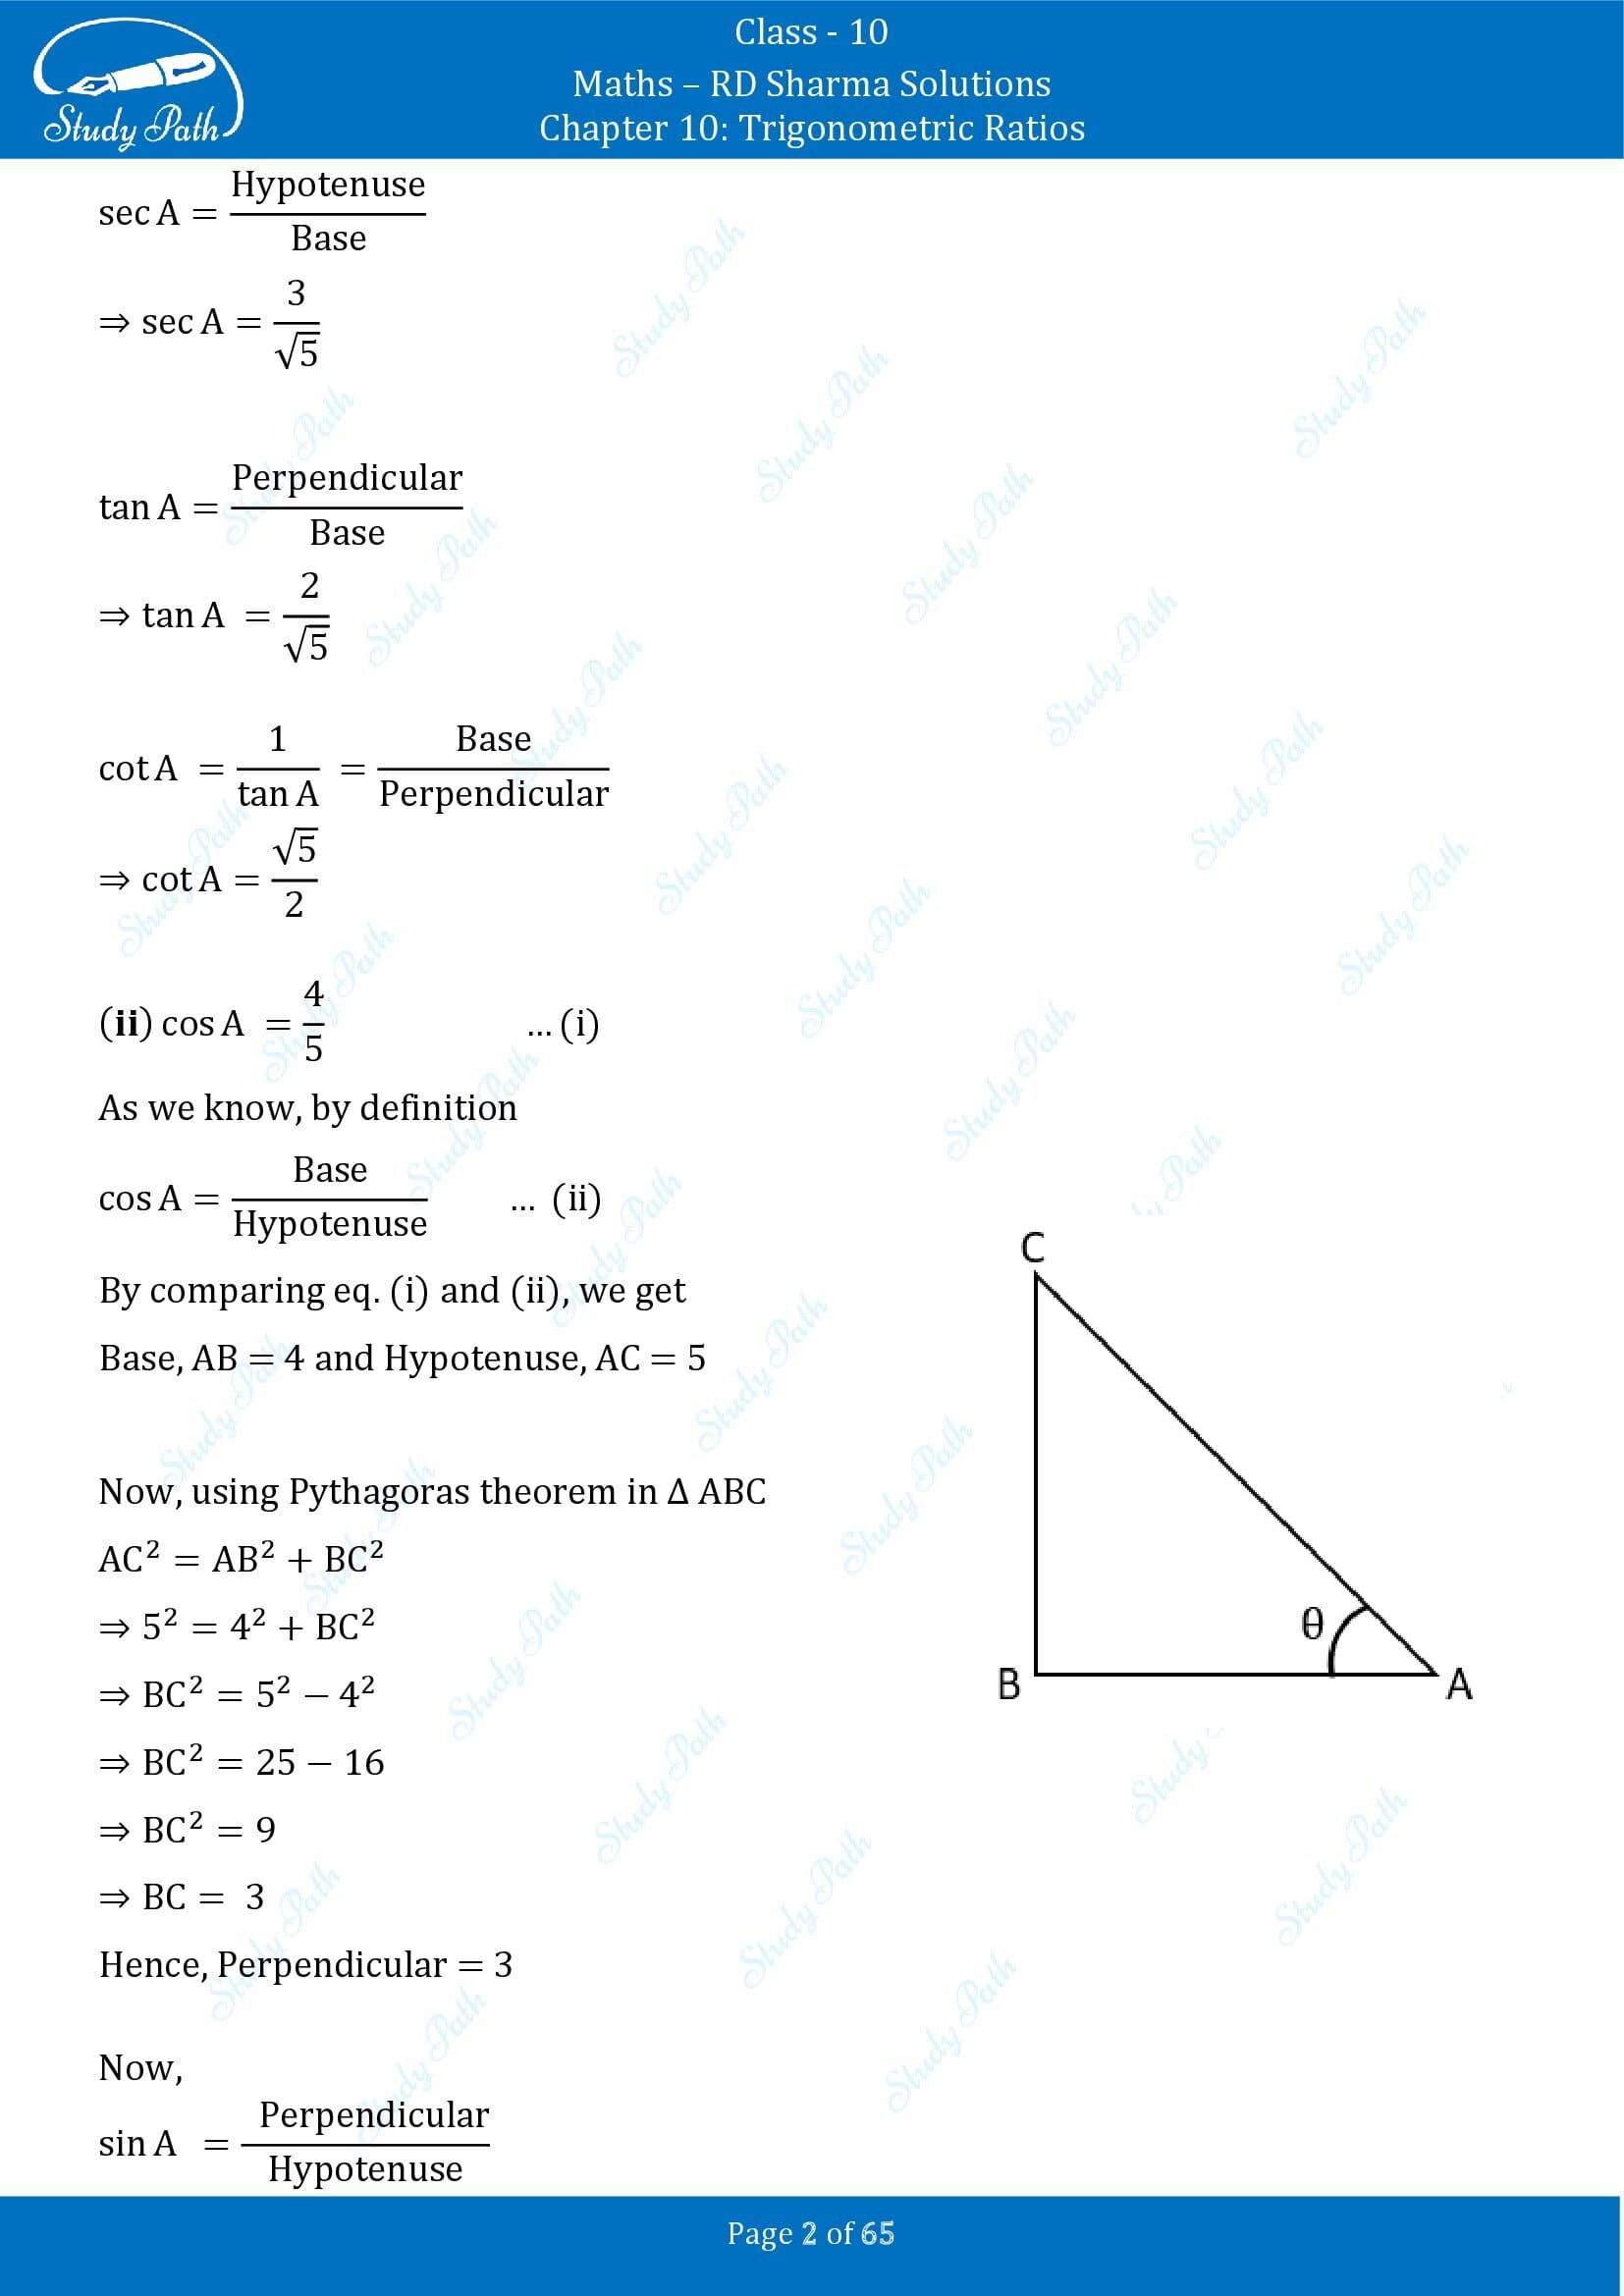 RD Sharma Solutions Class 10 Chapter 10 Trigonometric Ratios Exercise 10.1 00002